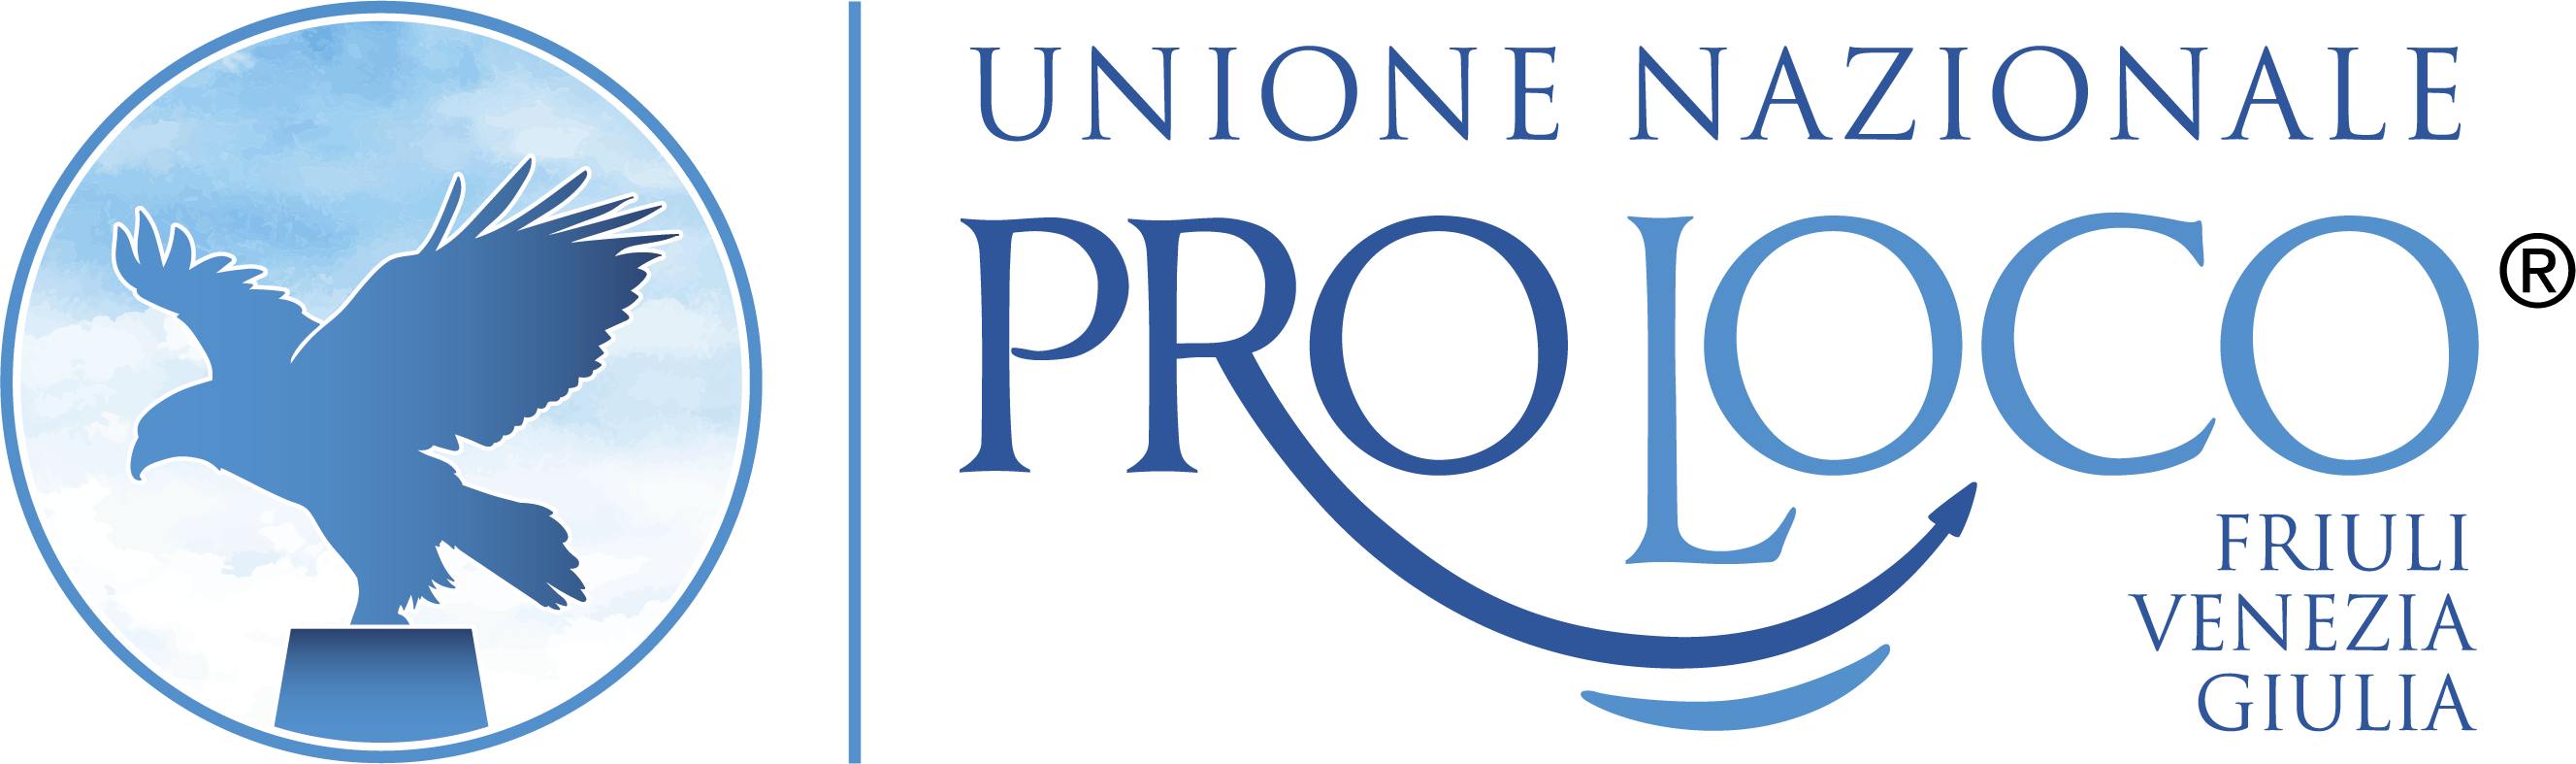 Unpli Pro Loco Logo Friuli.jpg